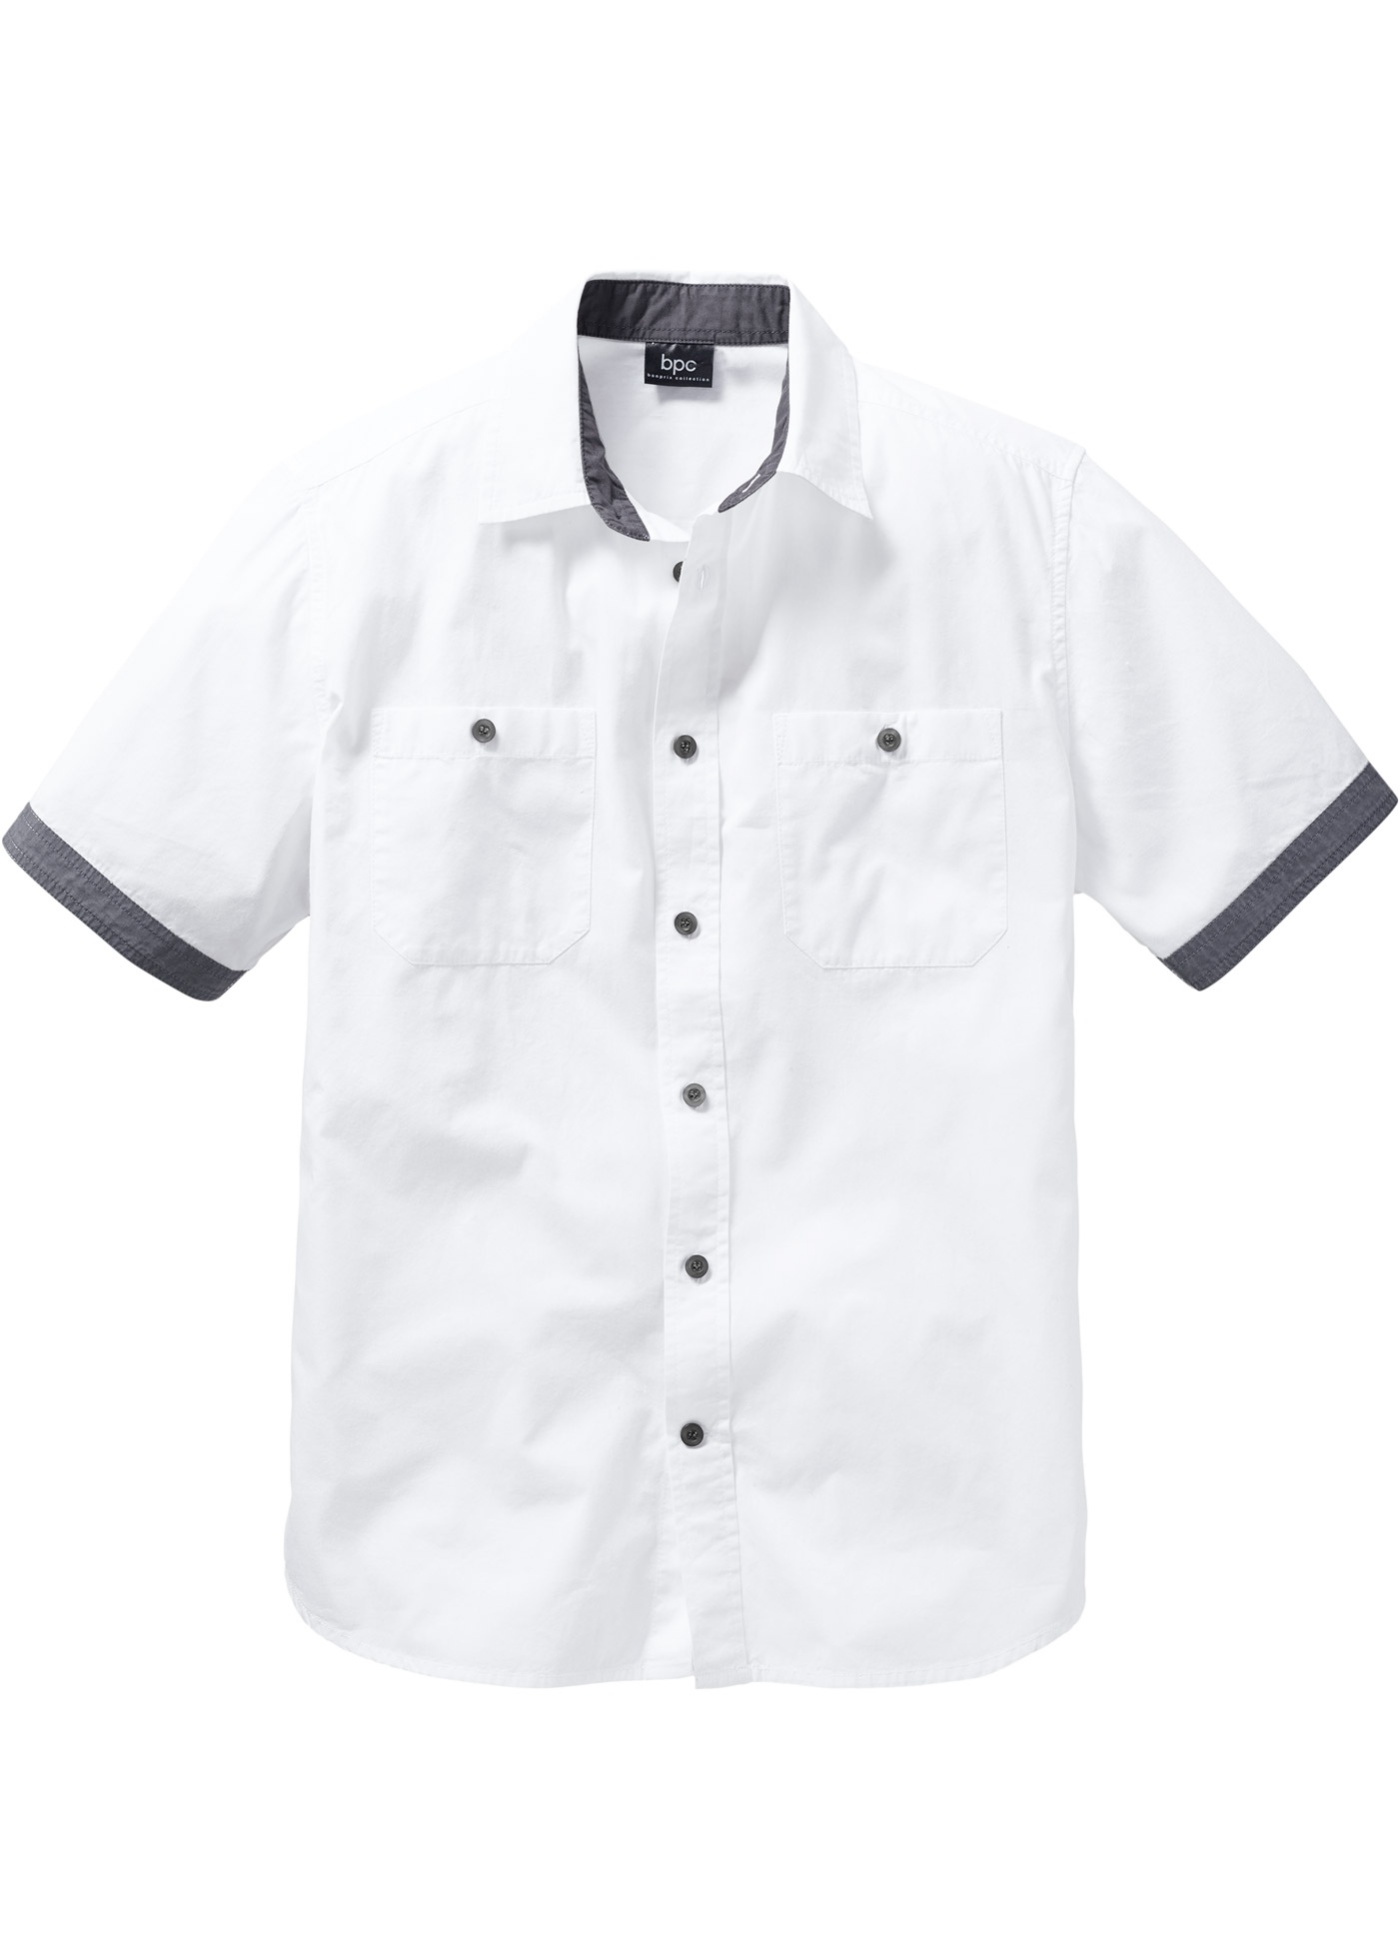 Рубашка белая мужская с коротким рукавом на Вонприксе